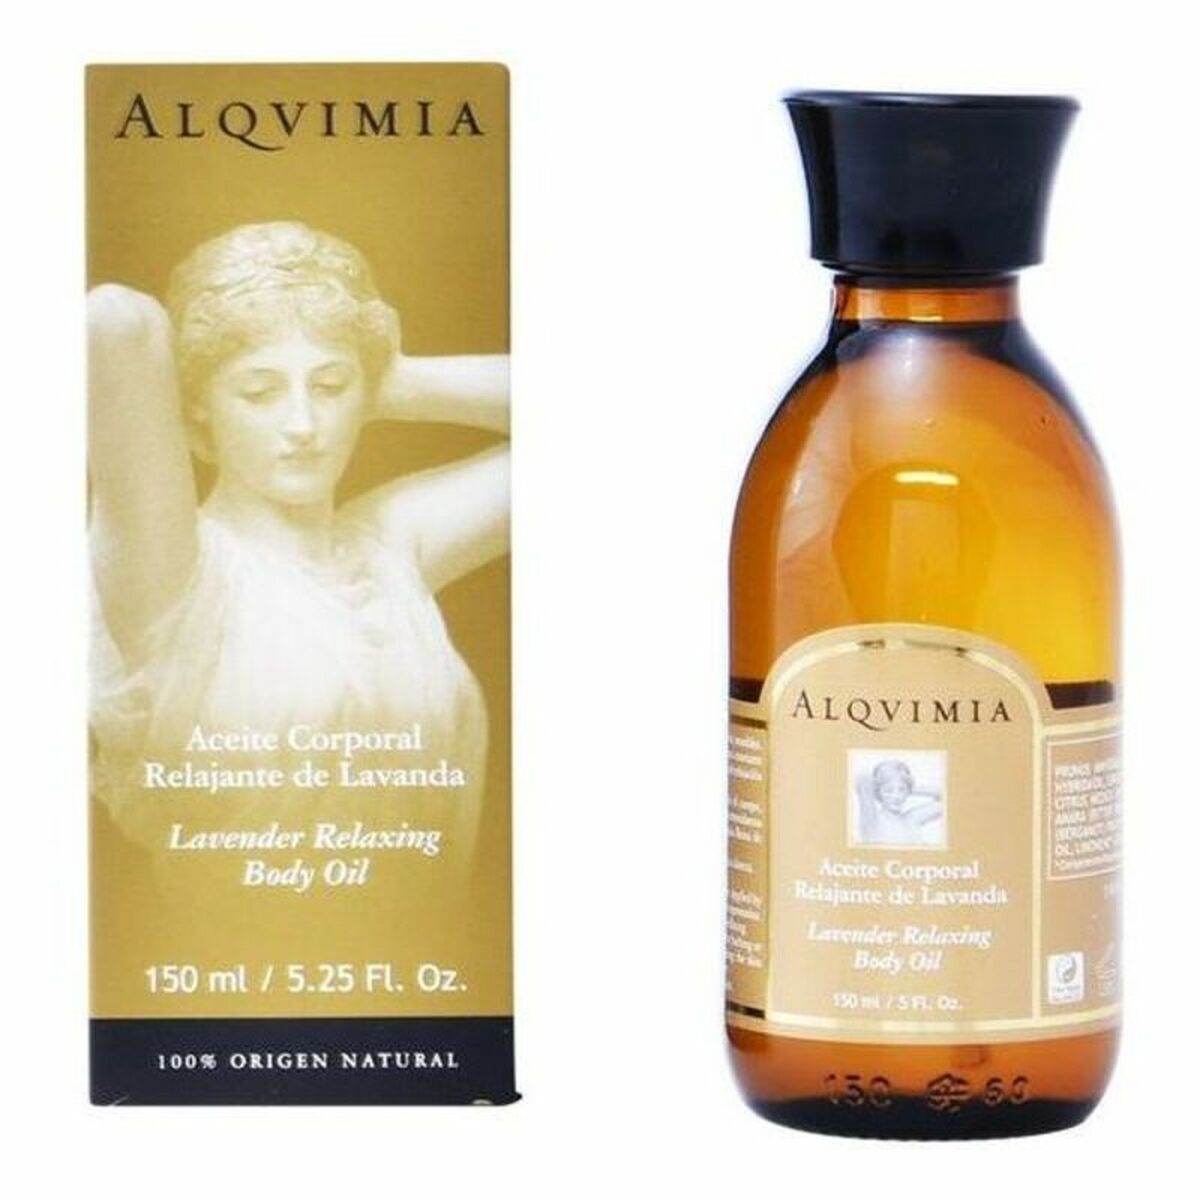 Kaufe Entspannendes Körperöl Lavender Oil Alqvimia 150 ml bei AWK Flagship um € 51.00